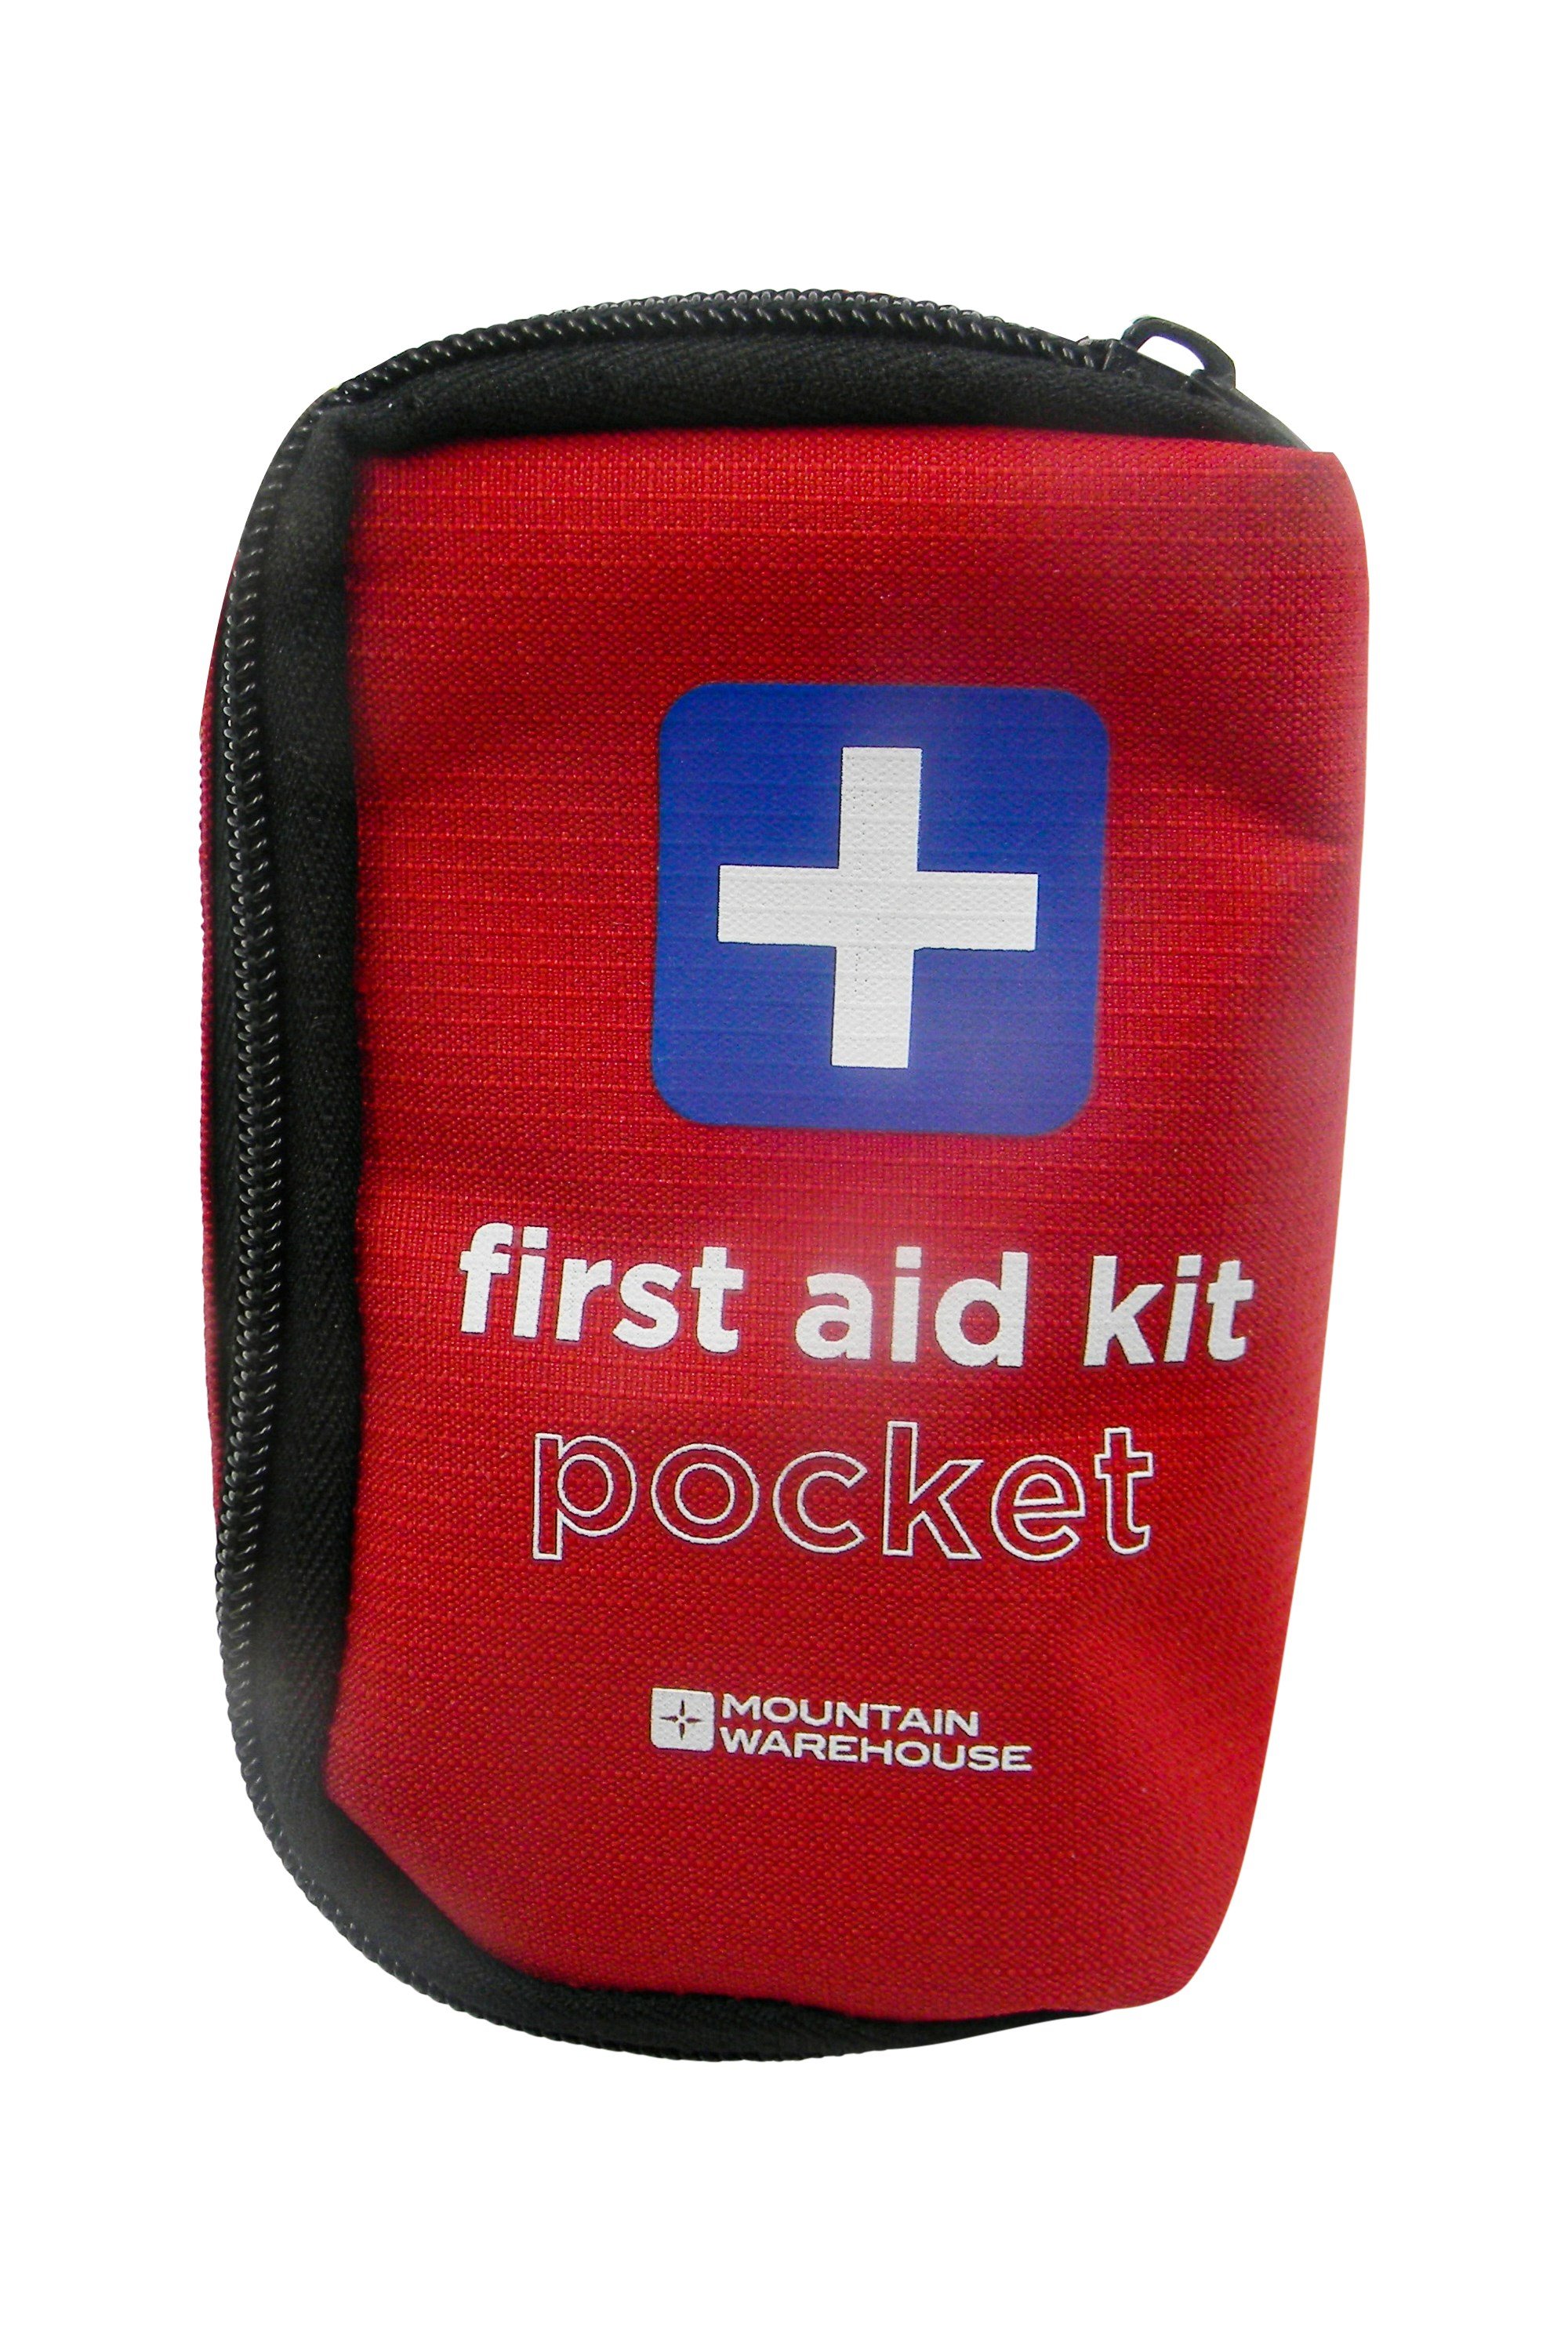 https://img.cdn.mountainwarehouse.com/product/036241/036241_red_pocket_first_aid_kit_har_ss20_1.jpg